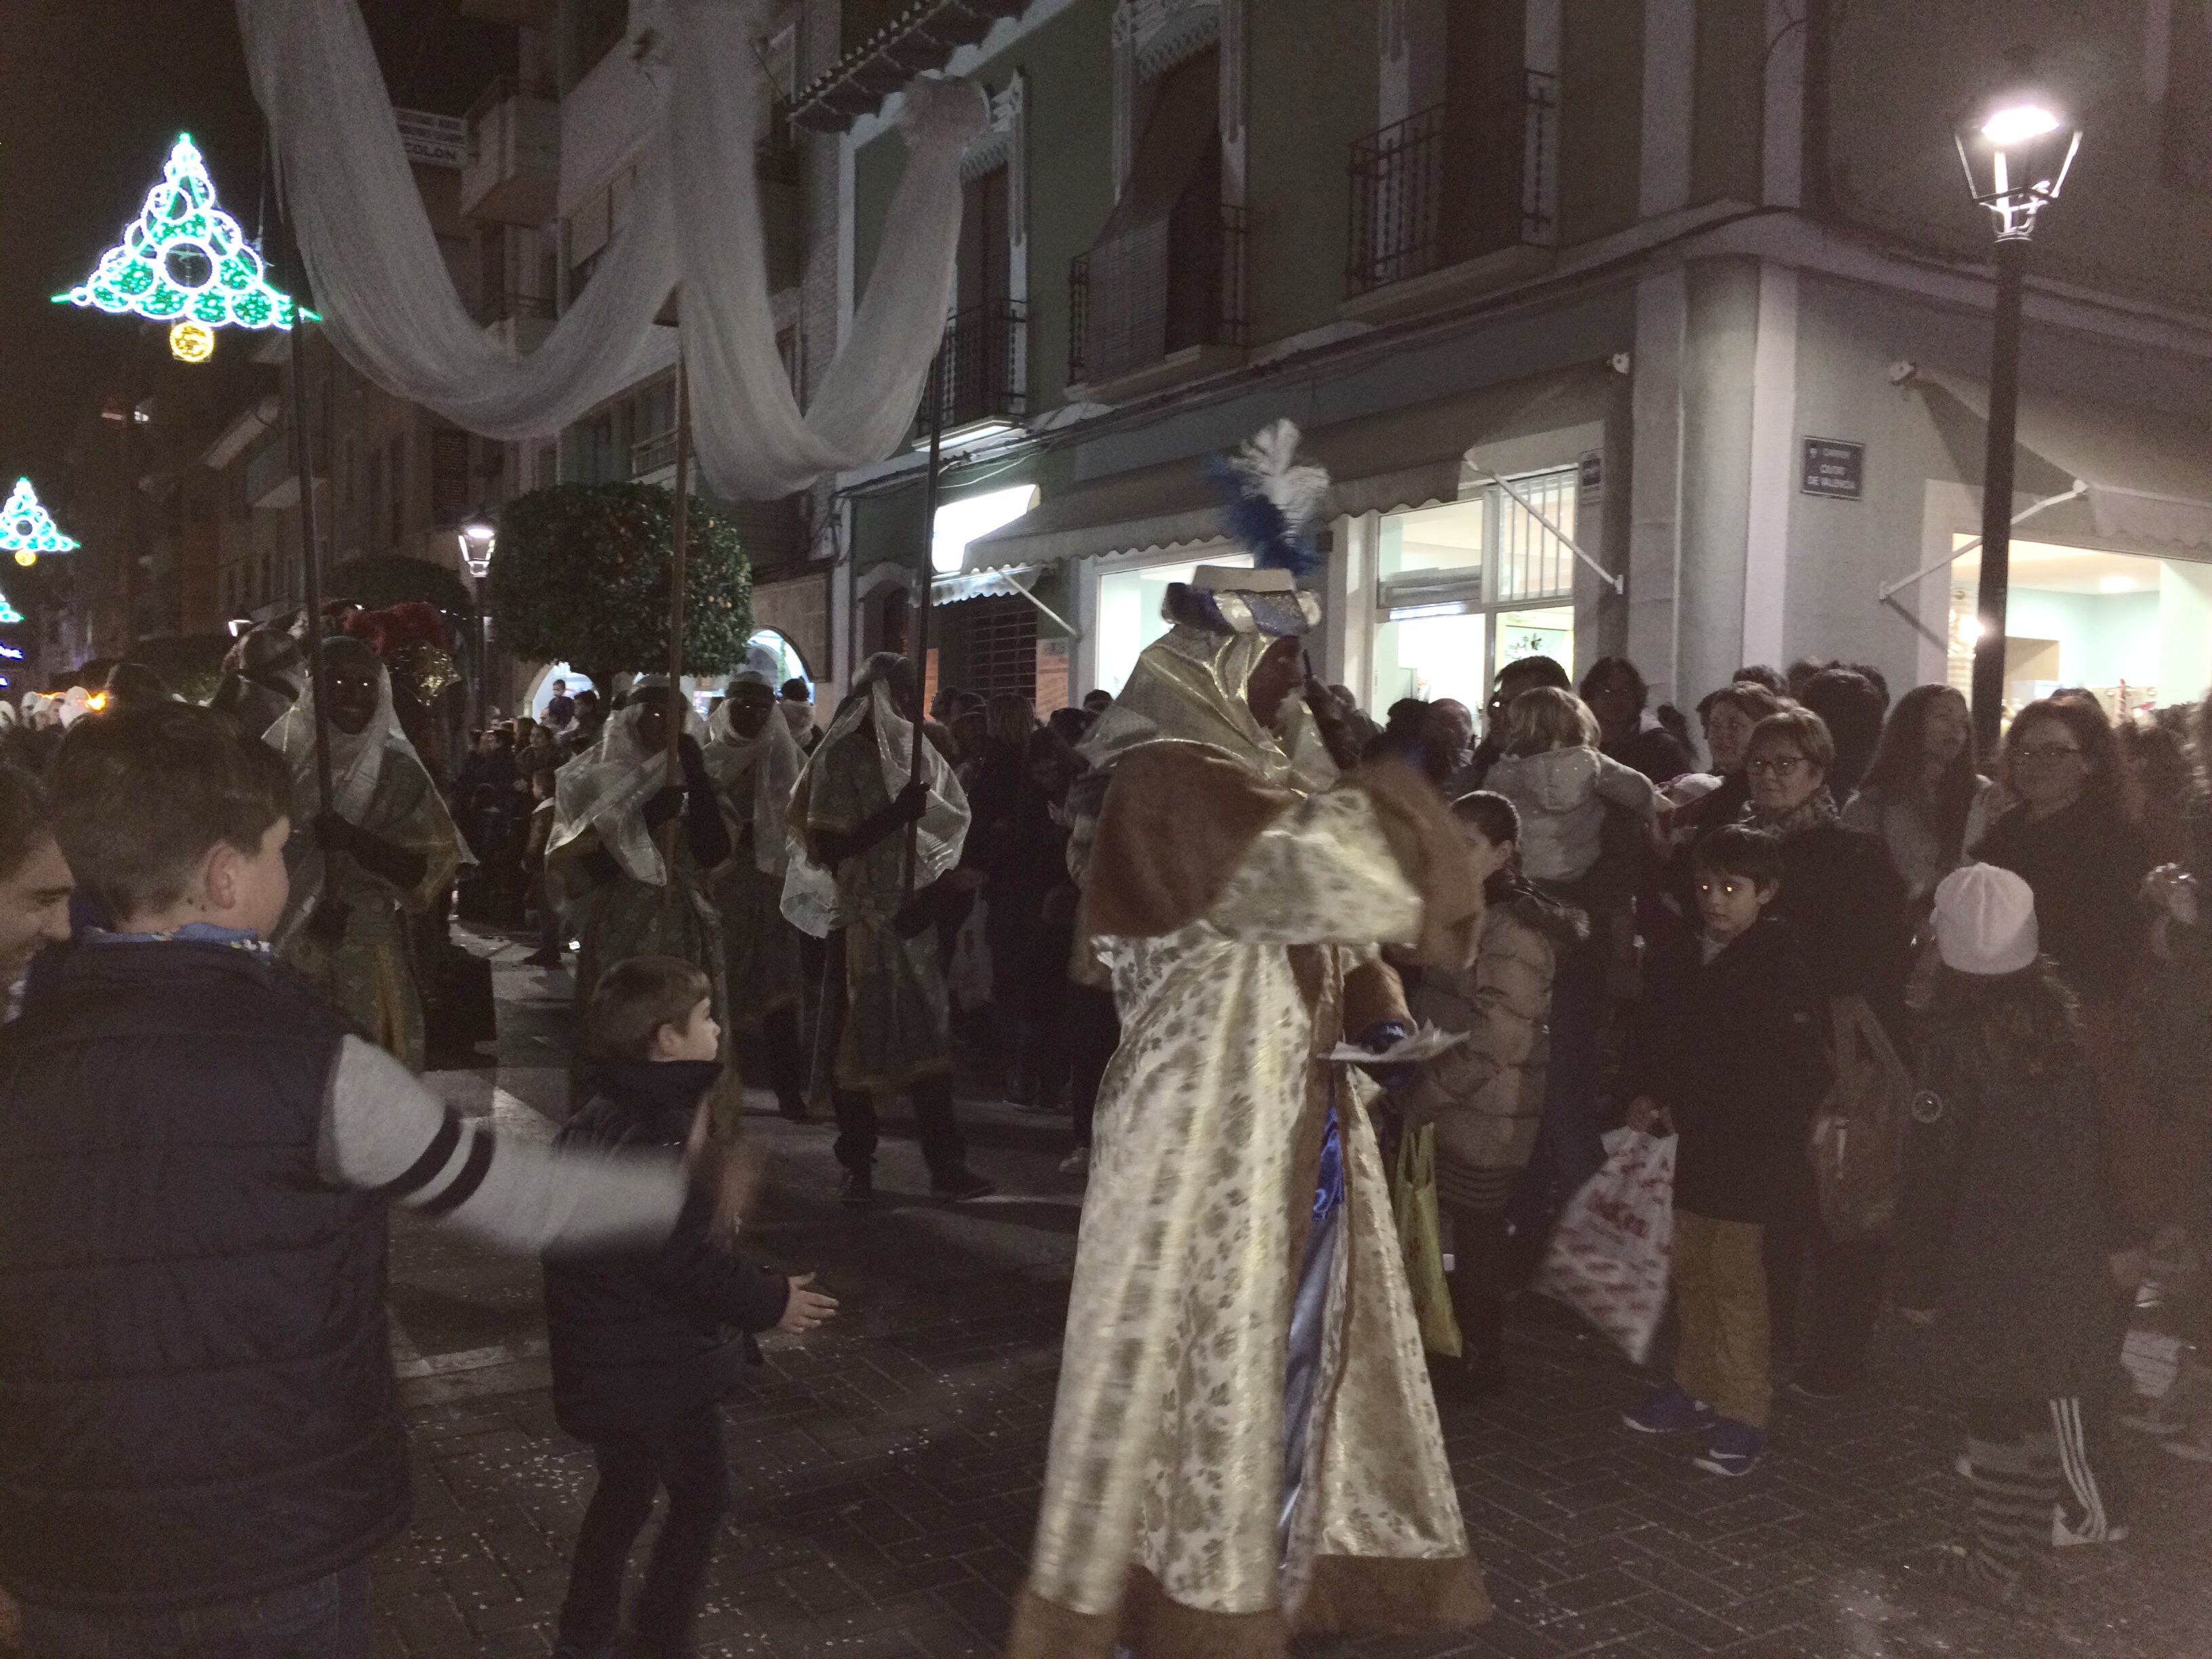 Three Kings parade - Vilajoysa Spain